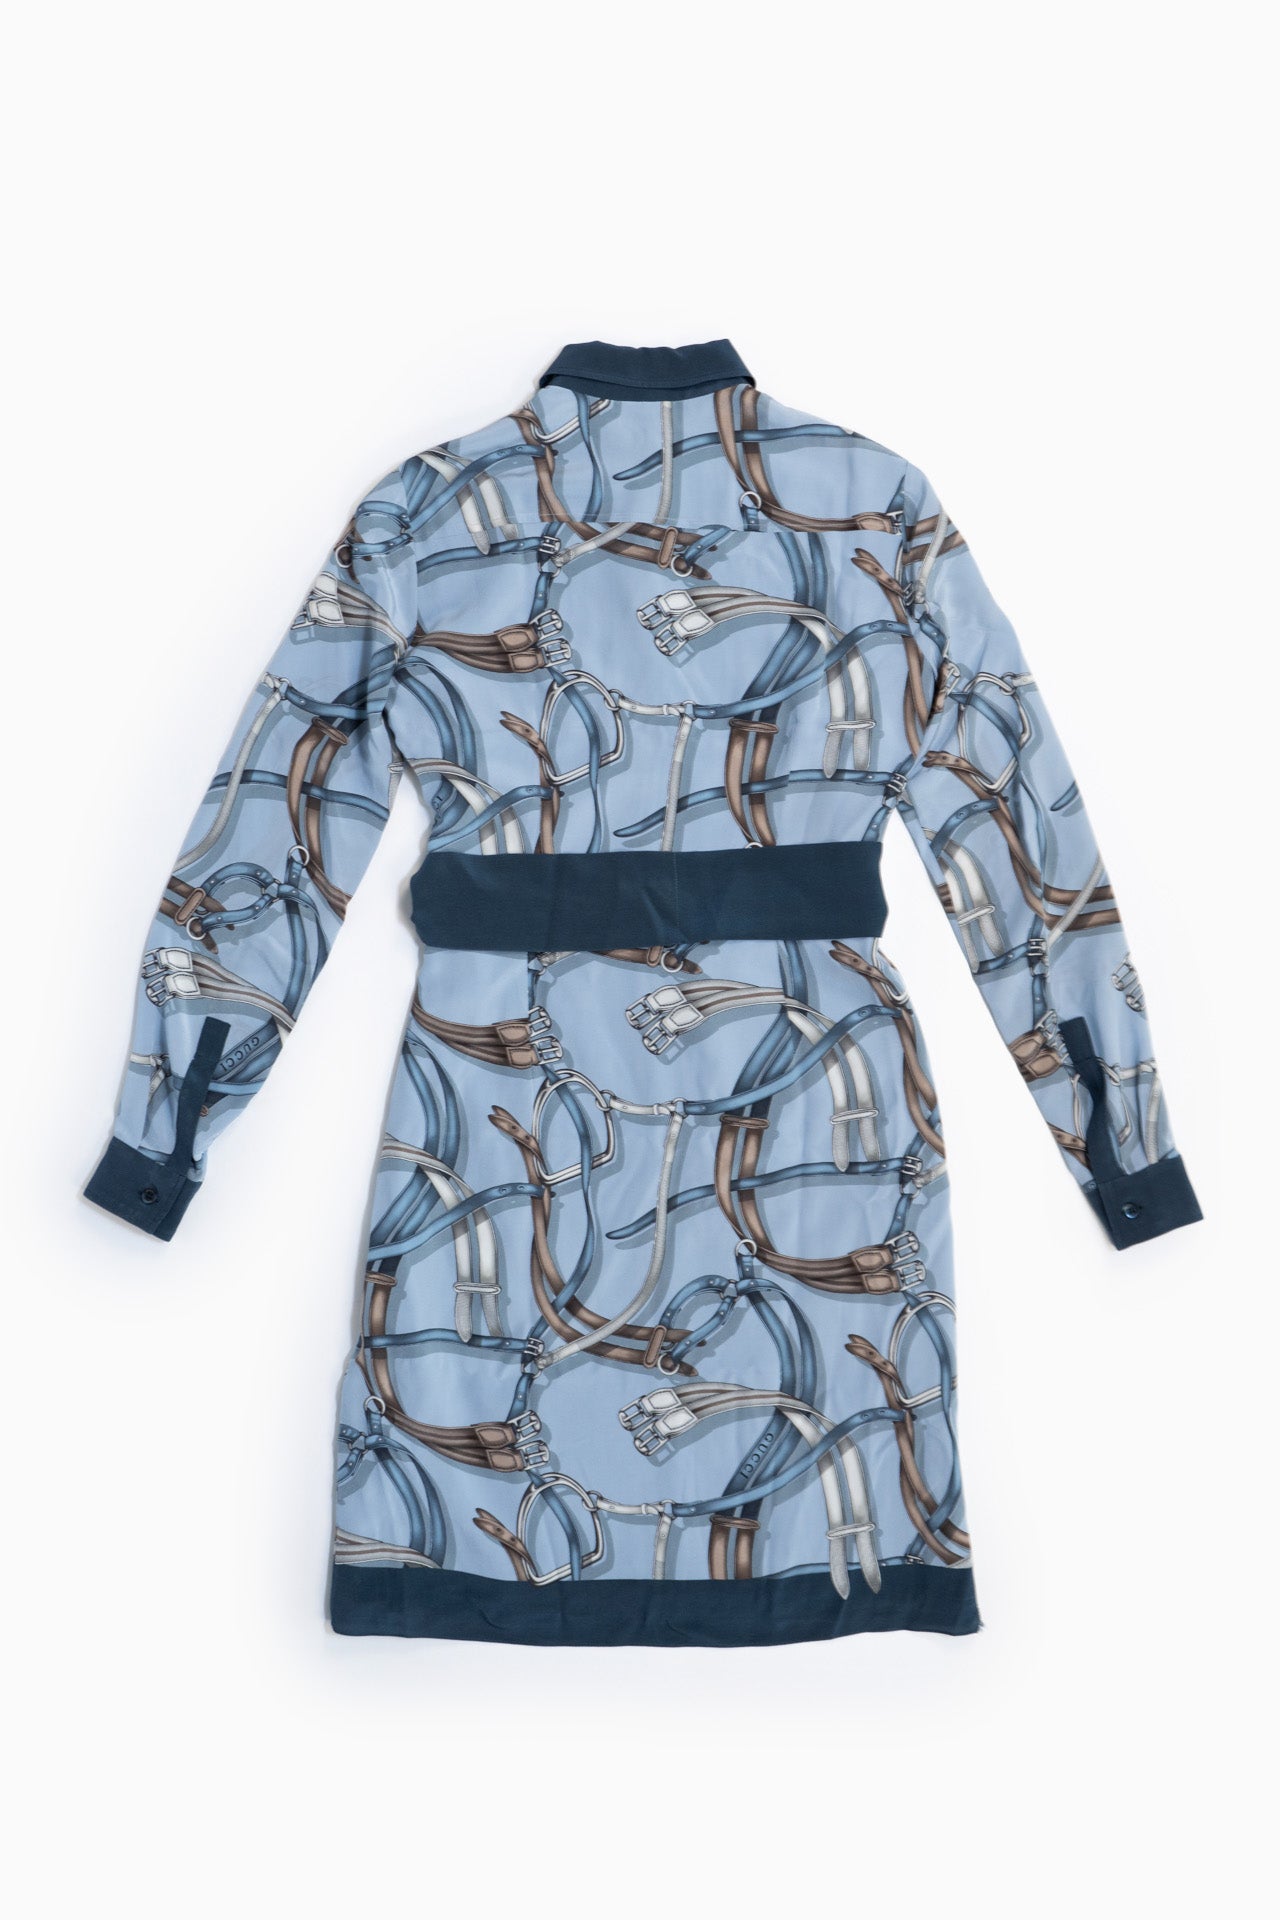 Gucci Printed Silk Dress in Blue- Size 38